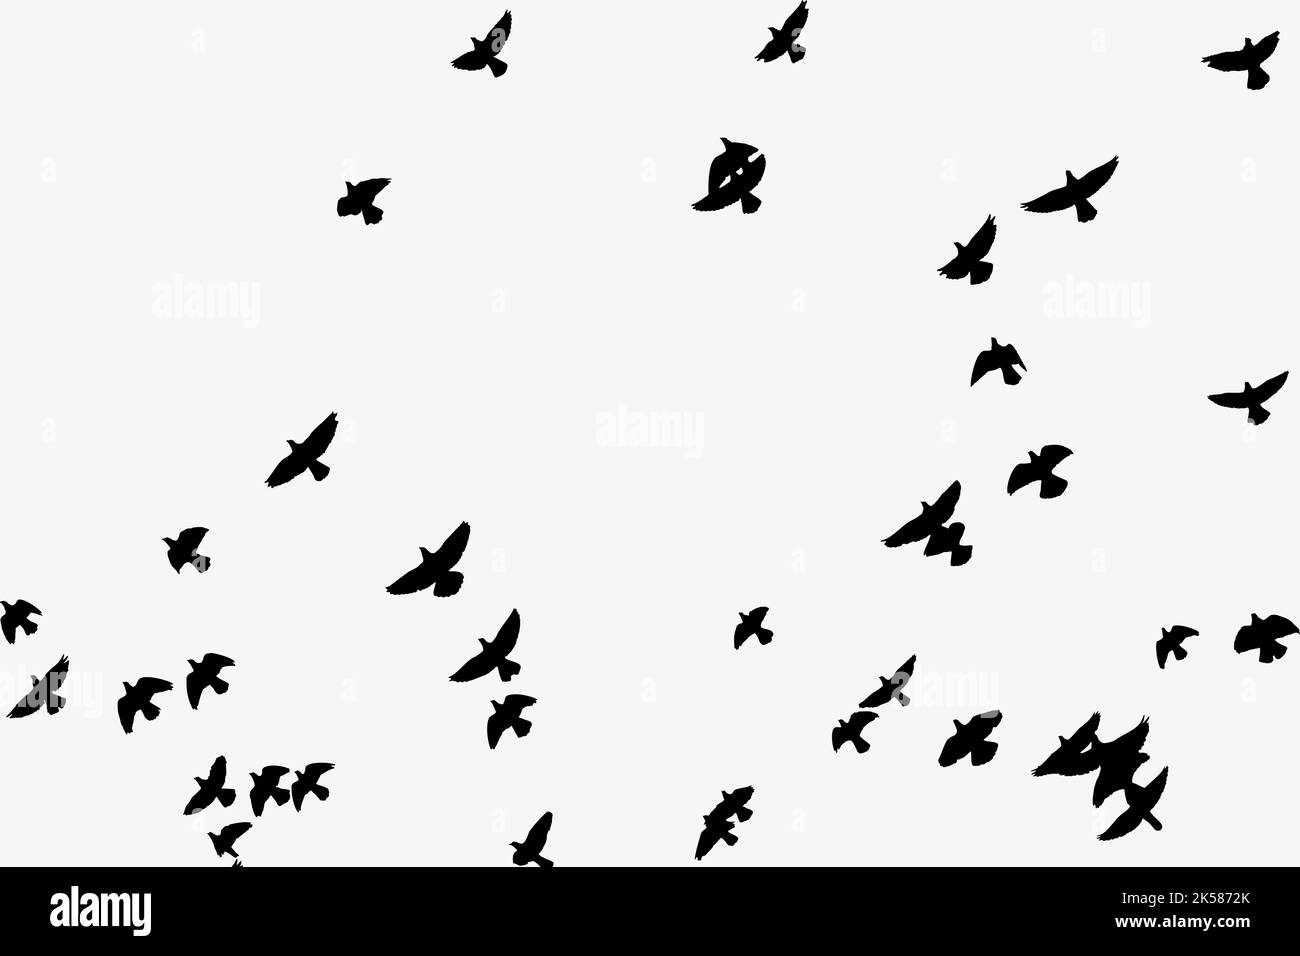 Flying Birds Silhouette Background Animal Illustration In Black Vector